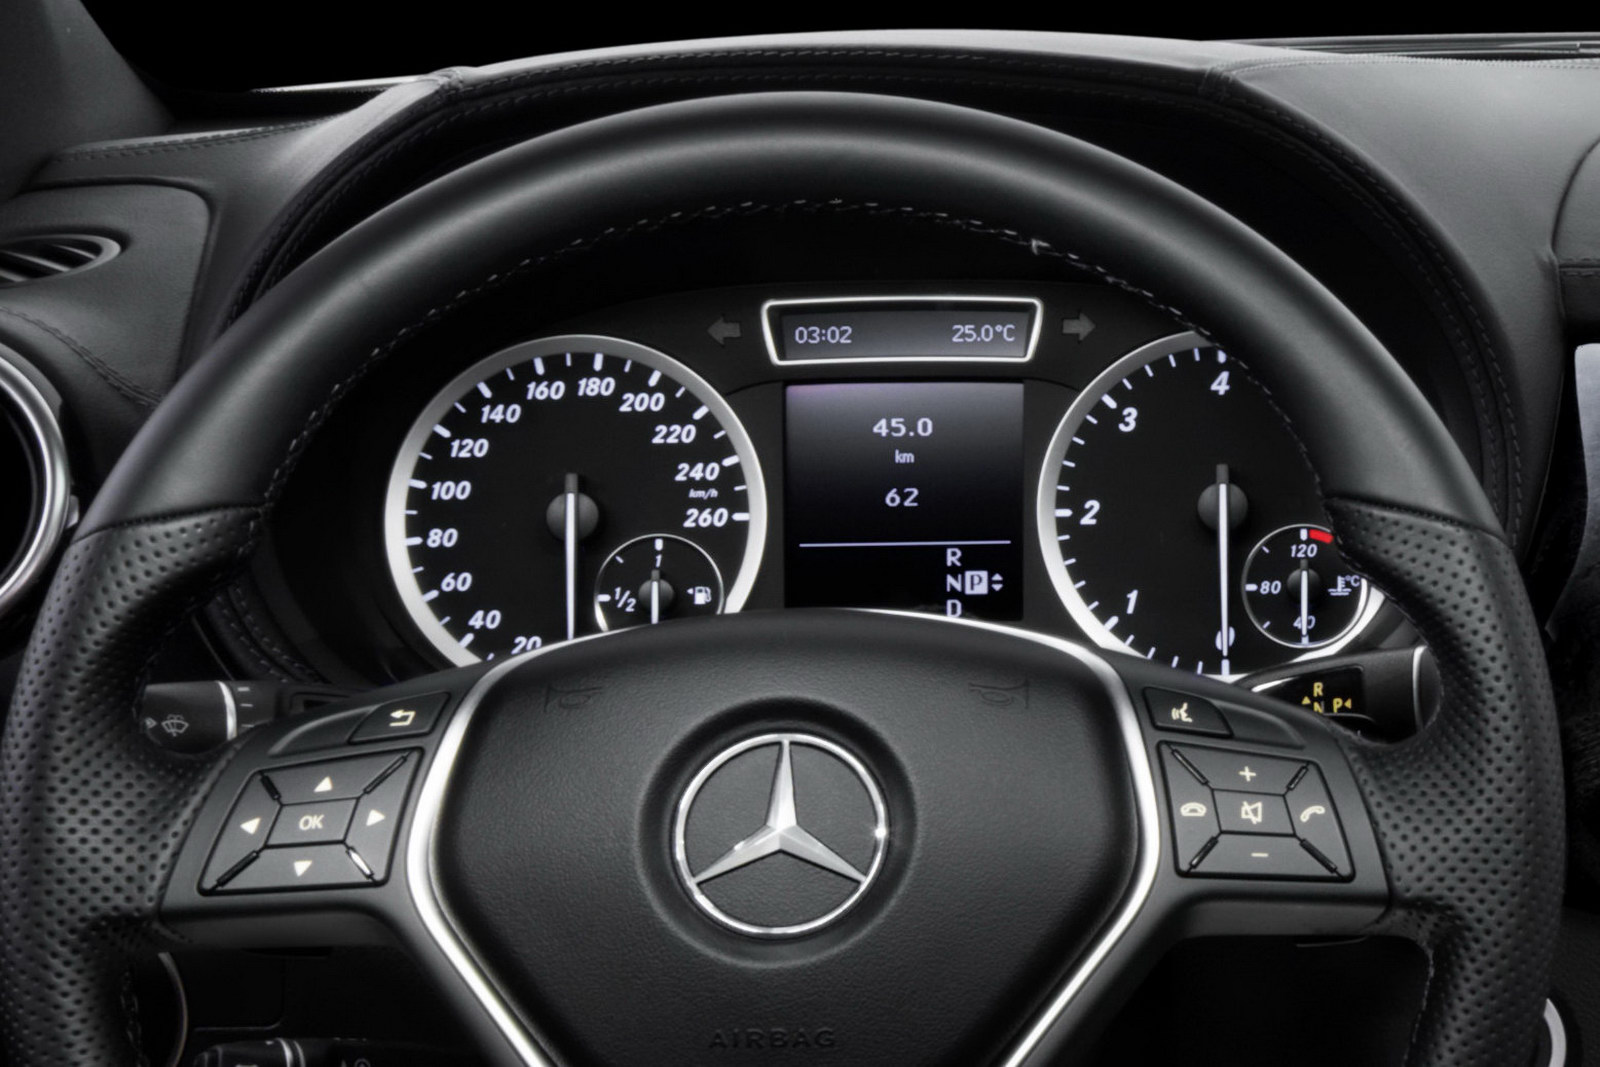 First Official Photo of New 2012 Mercedes-Benz B-Class